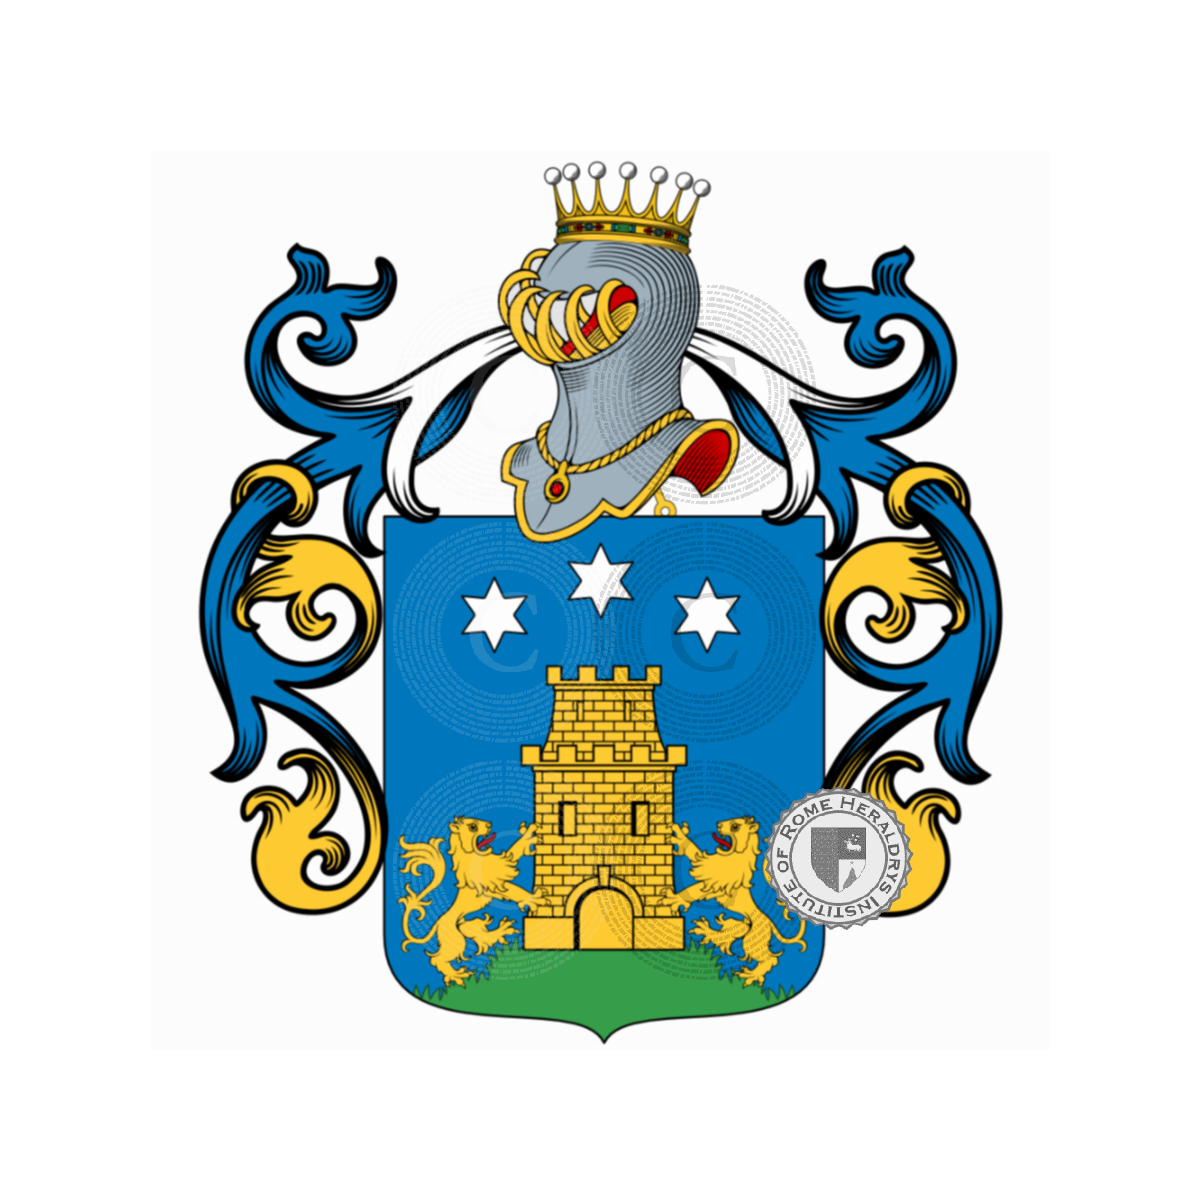 Coat of arms of familyTurrisi